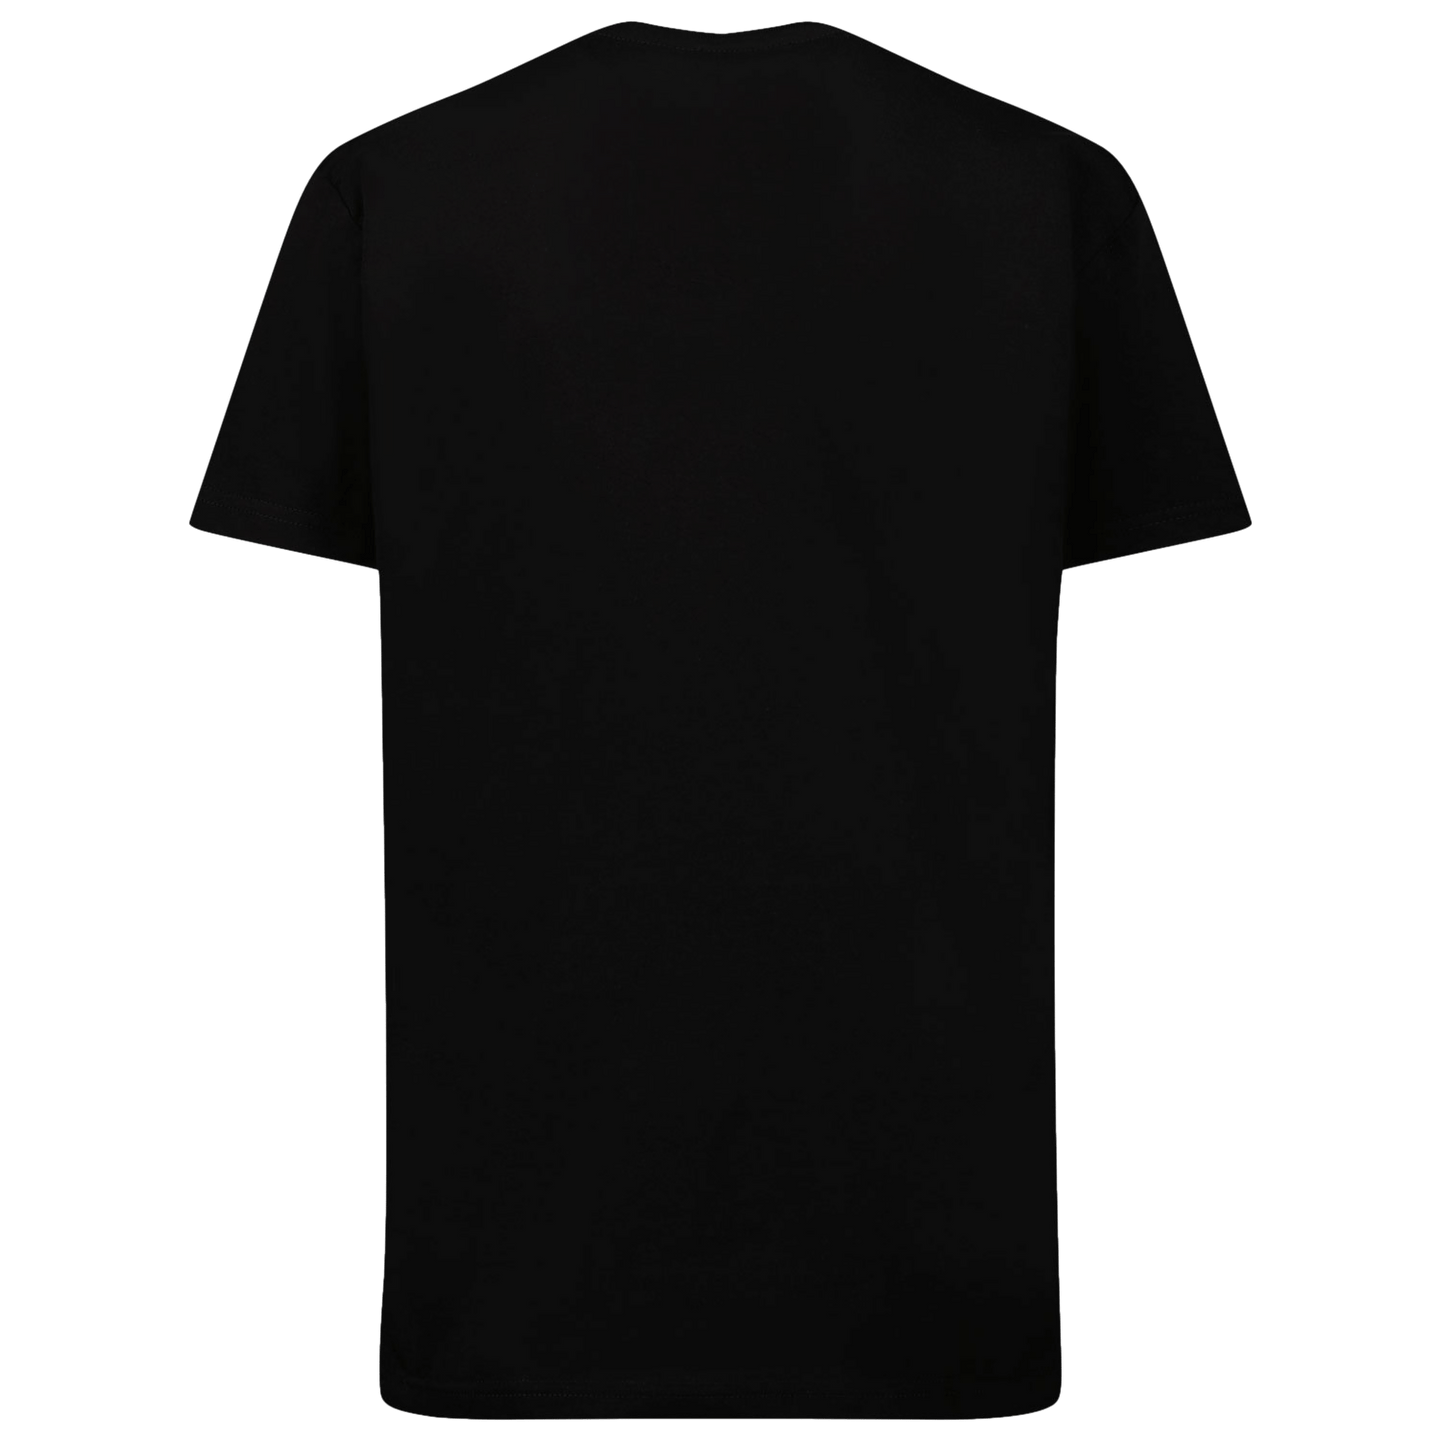 Dsquared2 Kinder Unisex T-Shirt Zwart 6Y